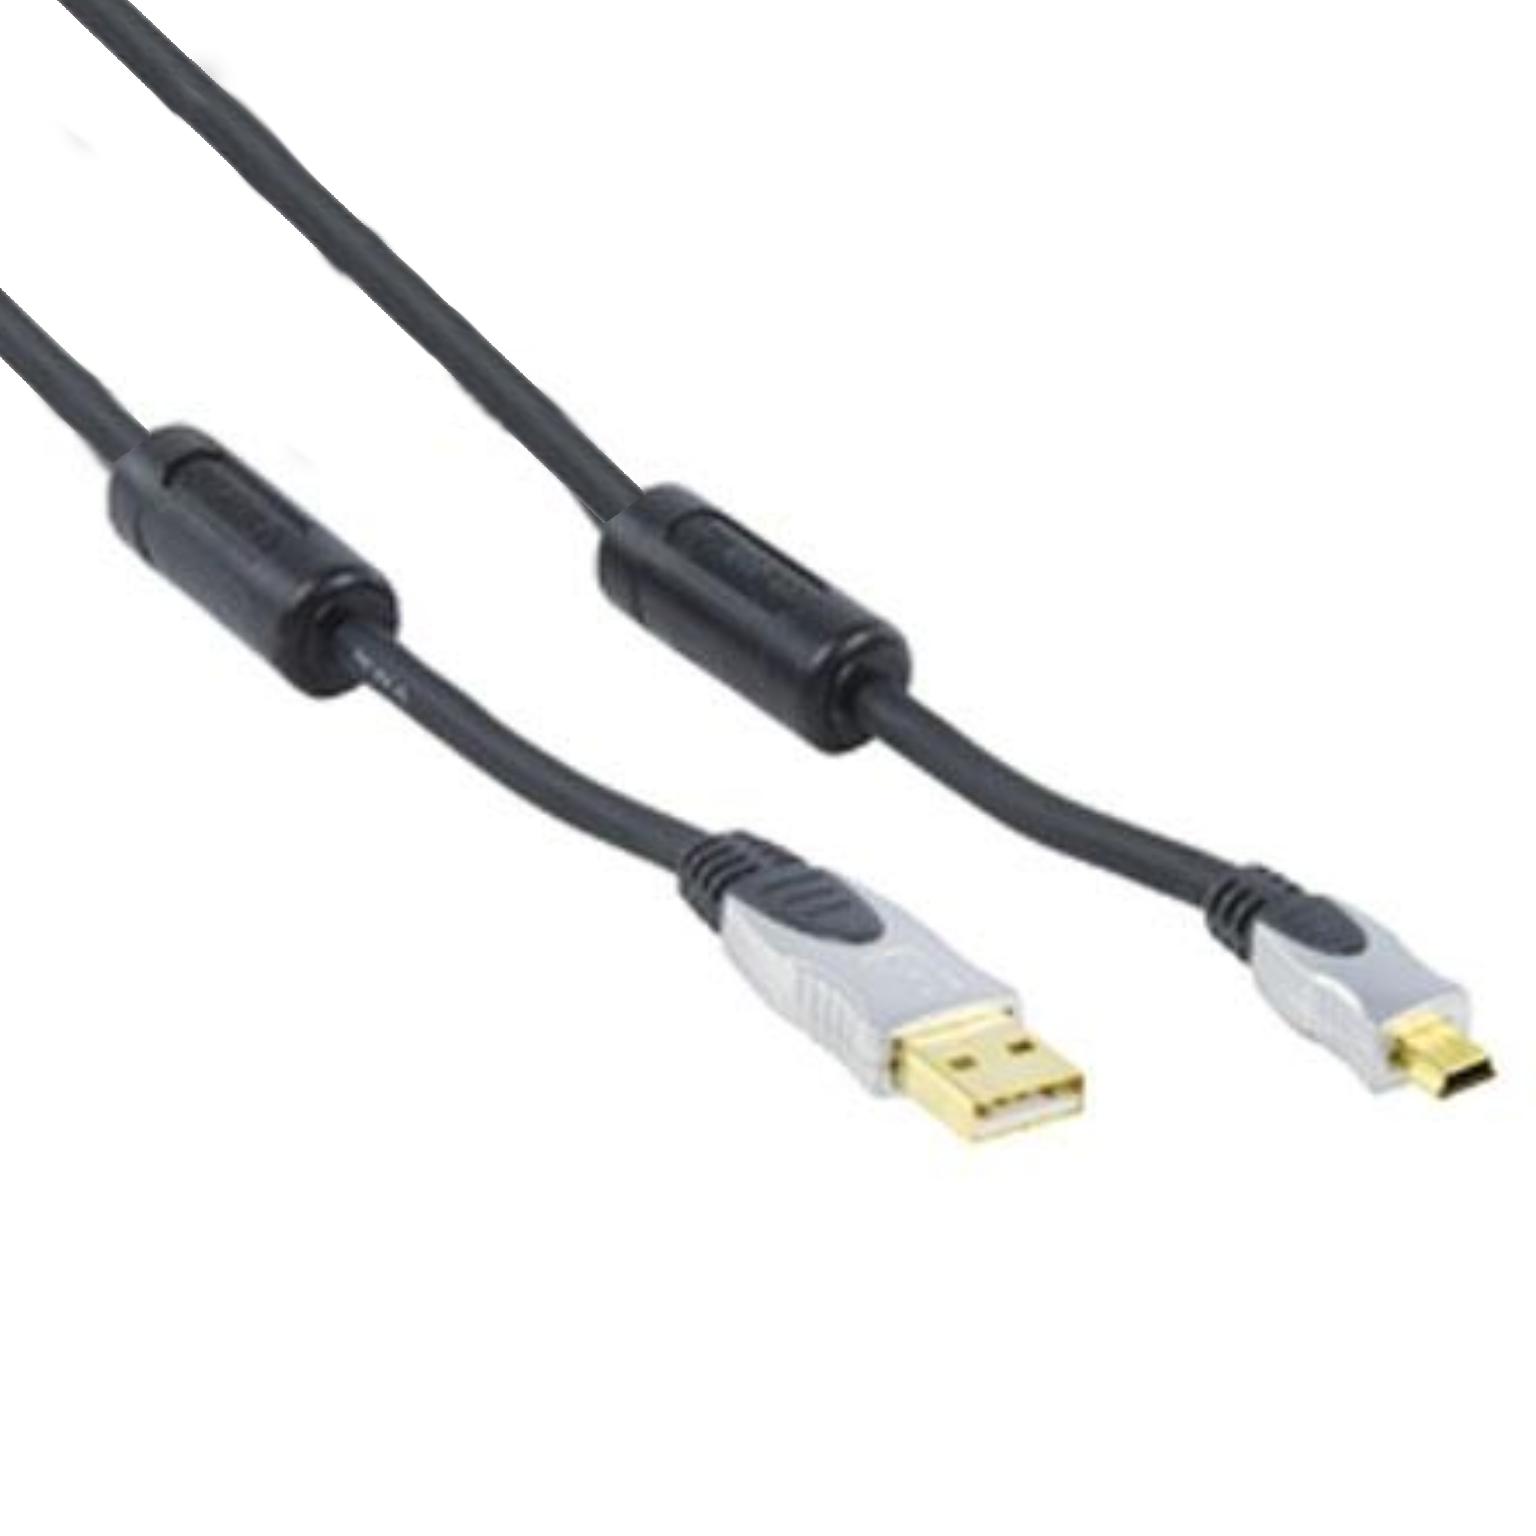 Image of USB mini kabel - 2.5 meter - Velleman